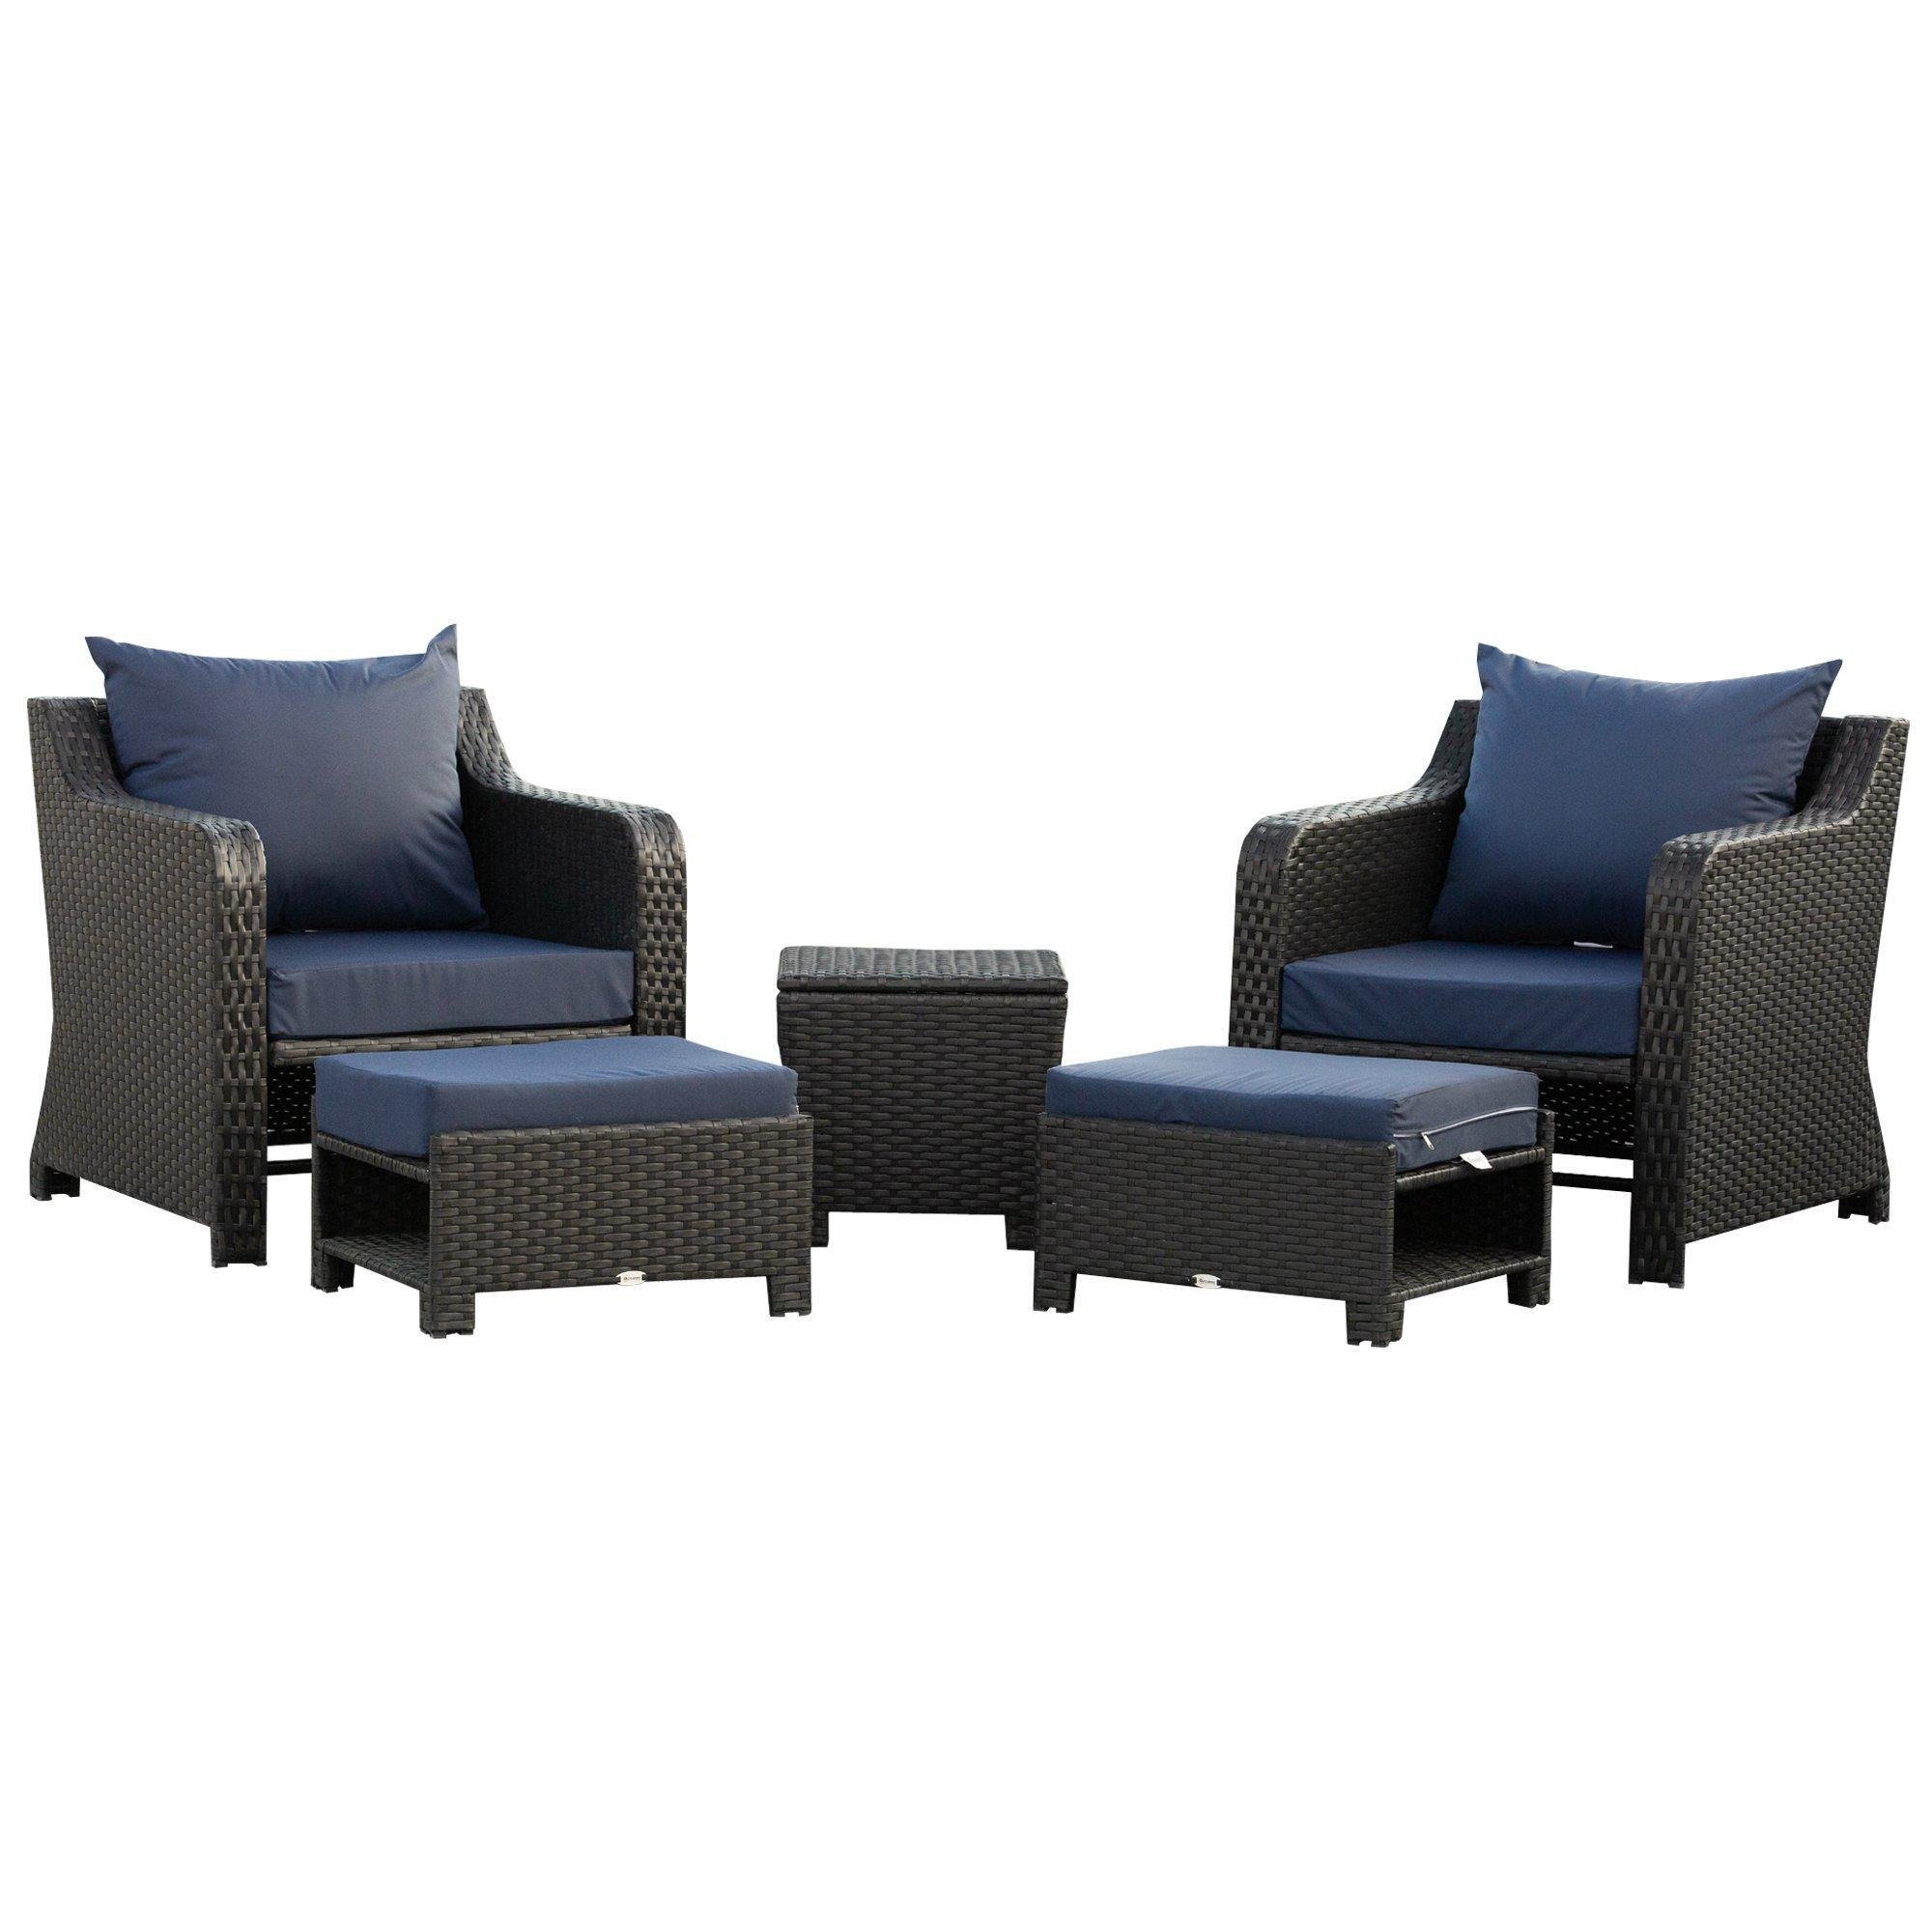 5pcs Outdoor Rattan Furniture Sofa Set w/ Storage Function Side Table & Ottoman - image 1